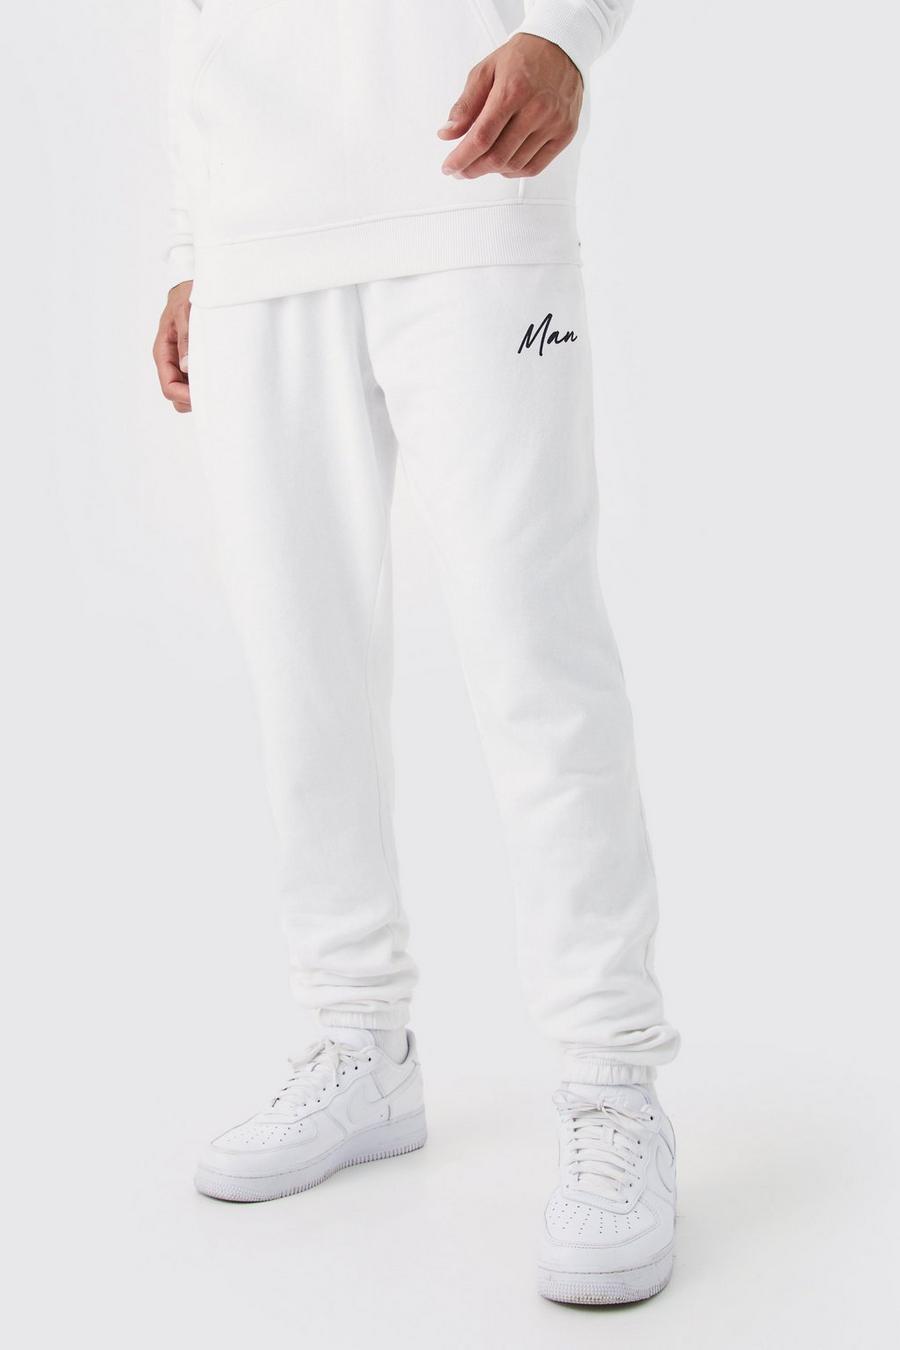 Pantalón deportivo Tall con firma MAN, White bianco